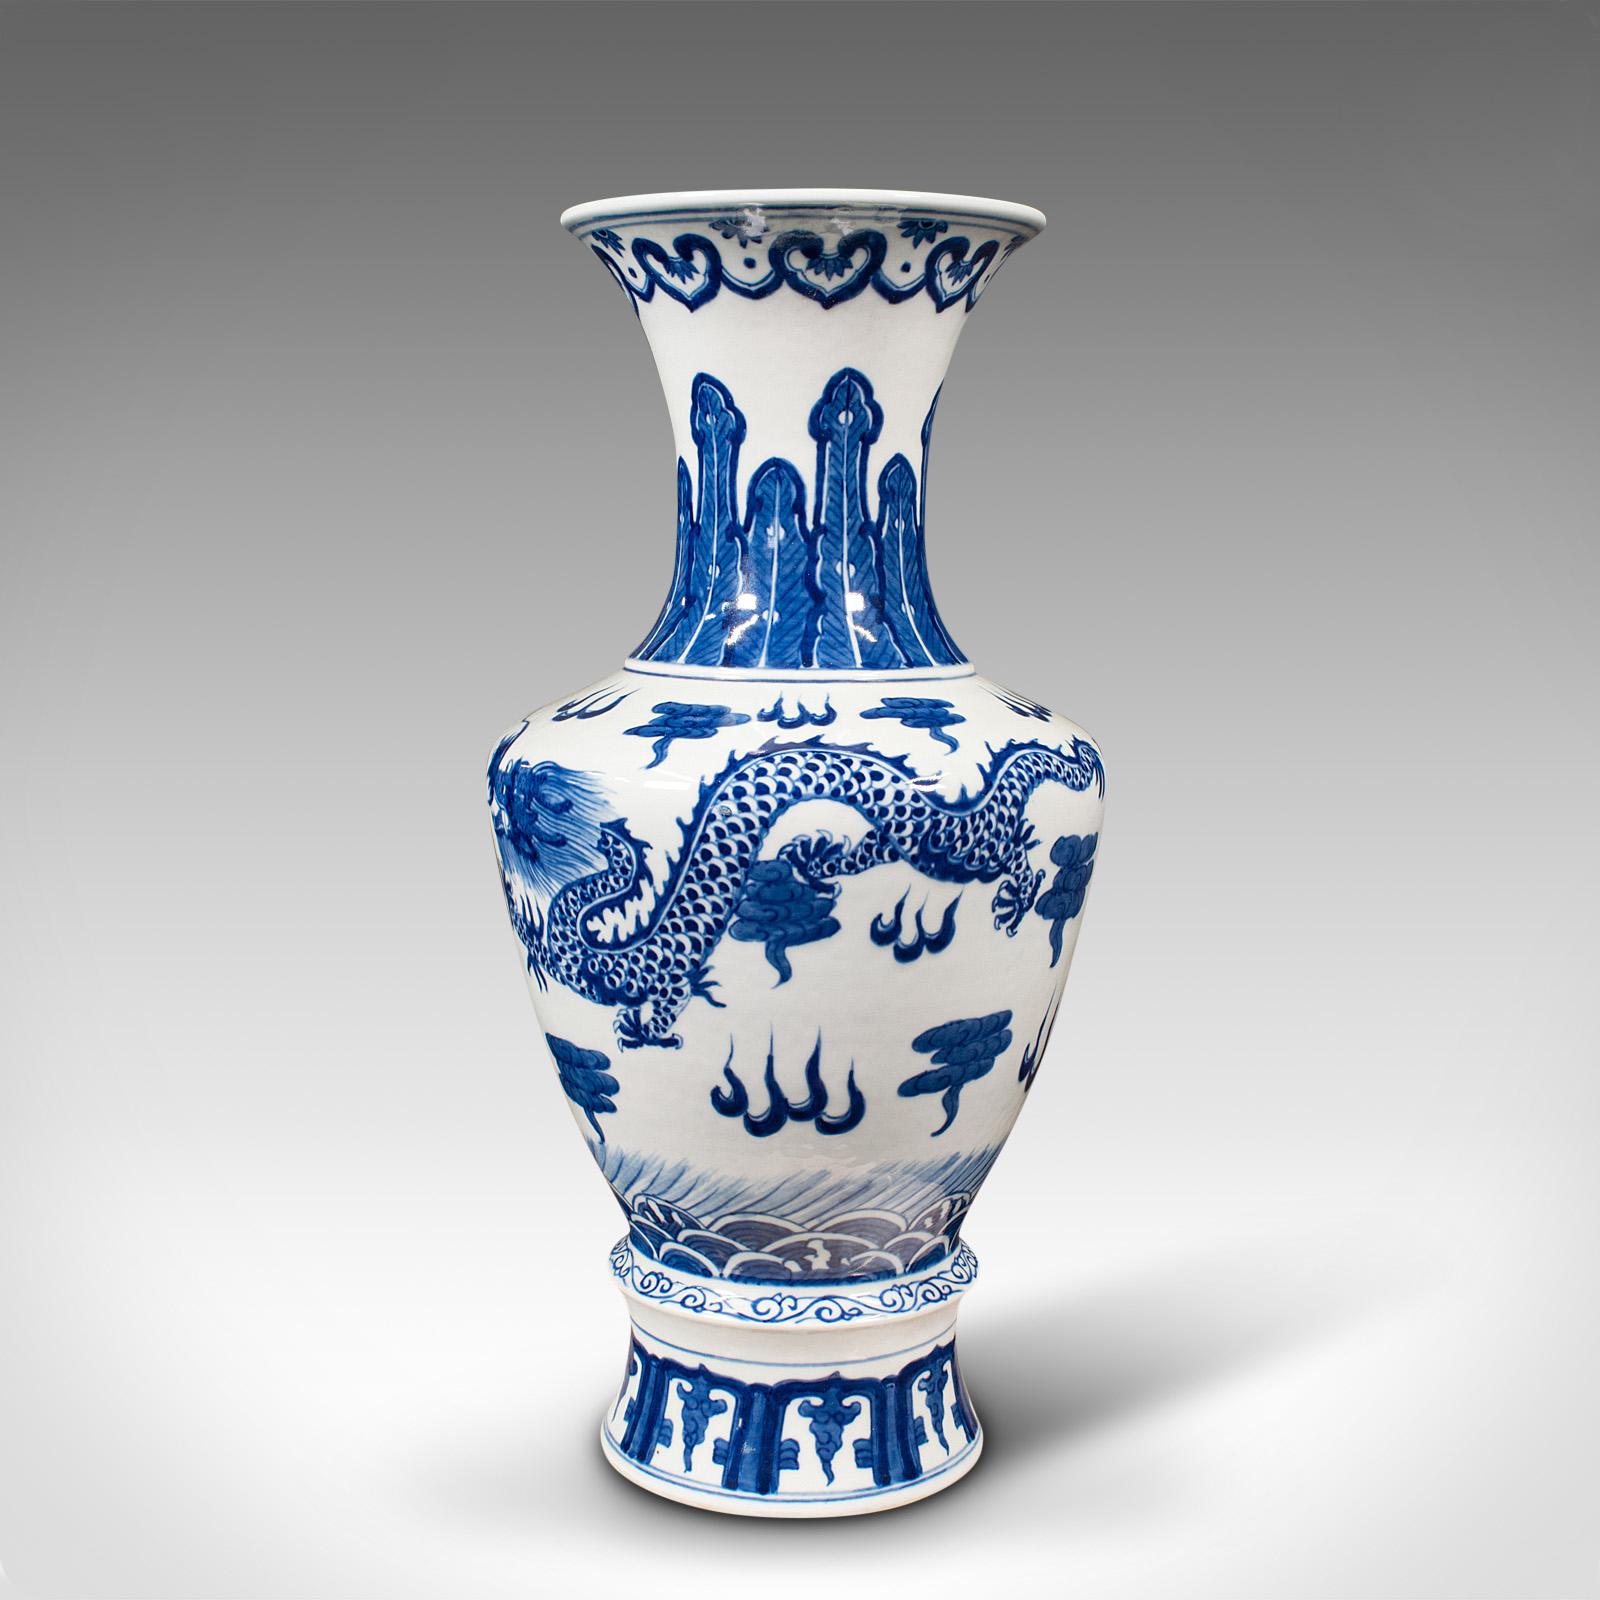 Tall Vintage White & Blue Vase, Chinese, Ceramic, Decorative, Flower, Art Deco For Sale 2